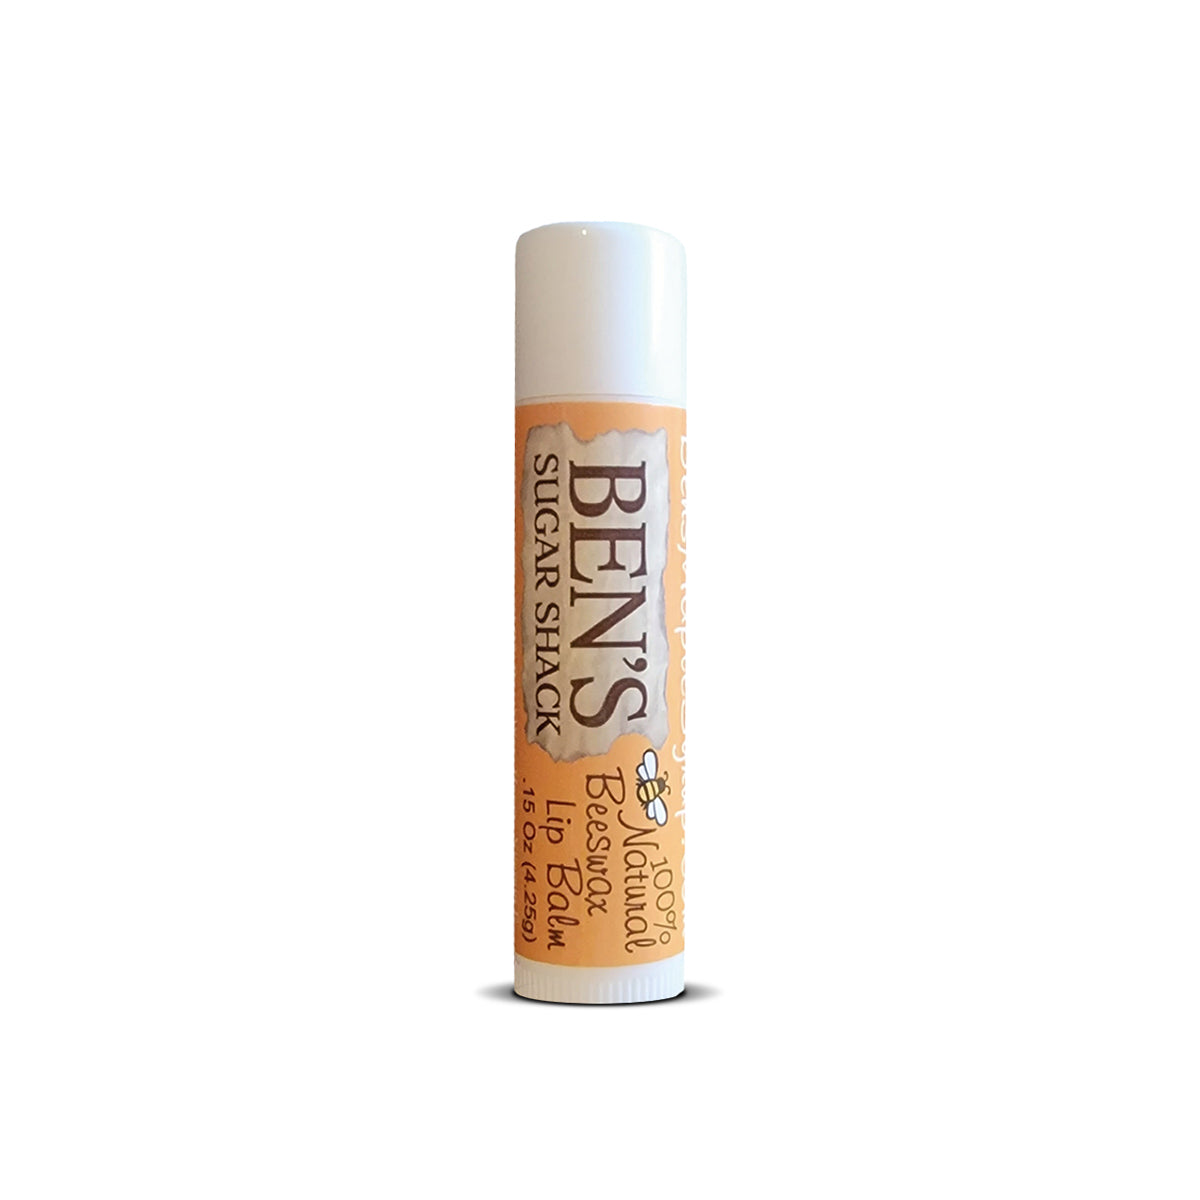 Ben's Beeswax Lip Balm – Bens Maple Syrup